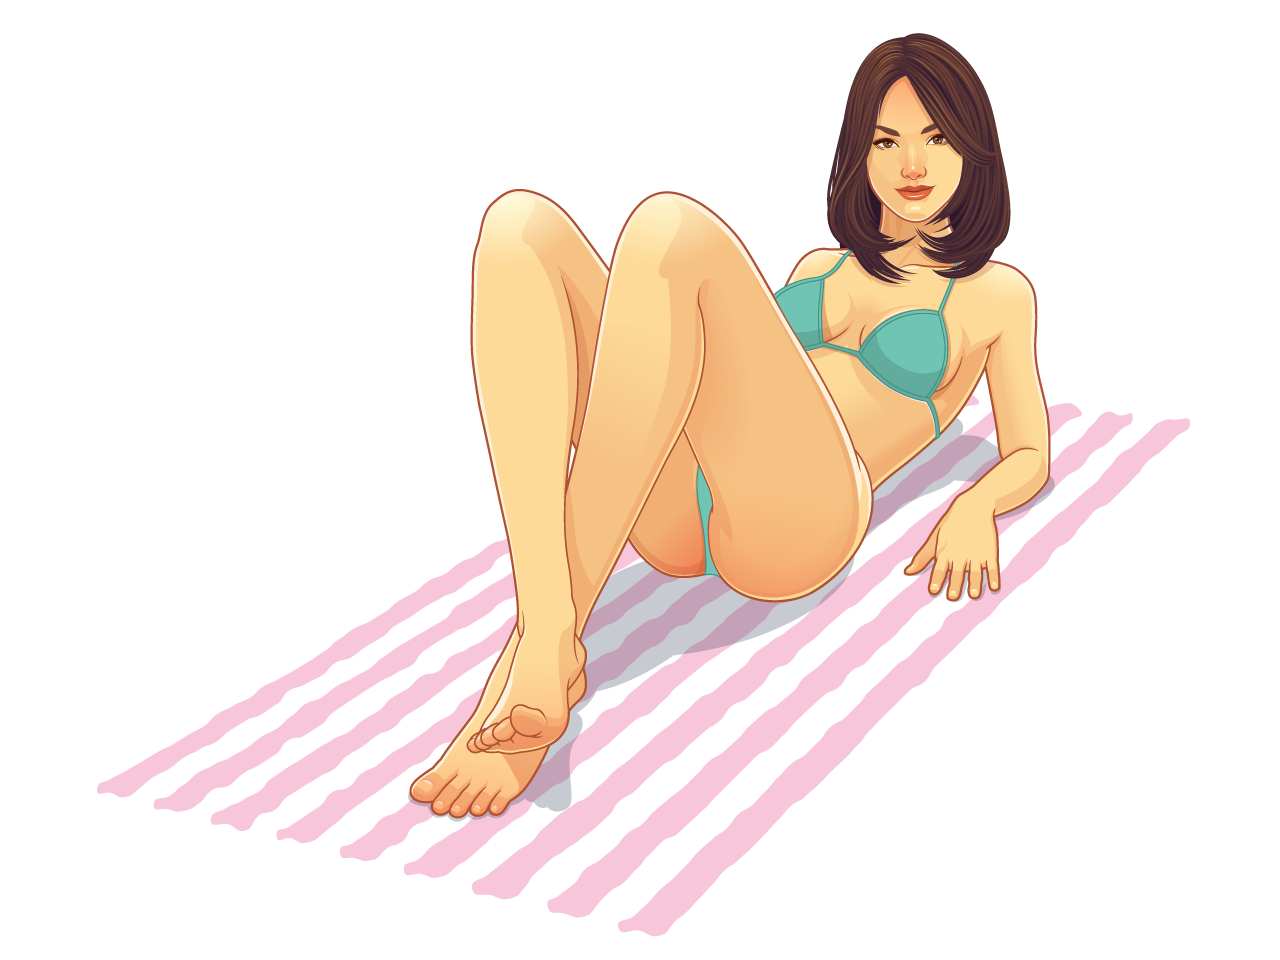 Bikini girl laying beach towel cartoon illustration image hand drawing sketch